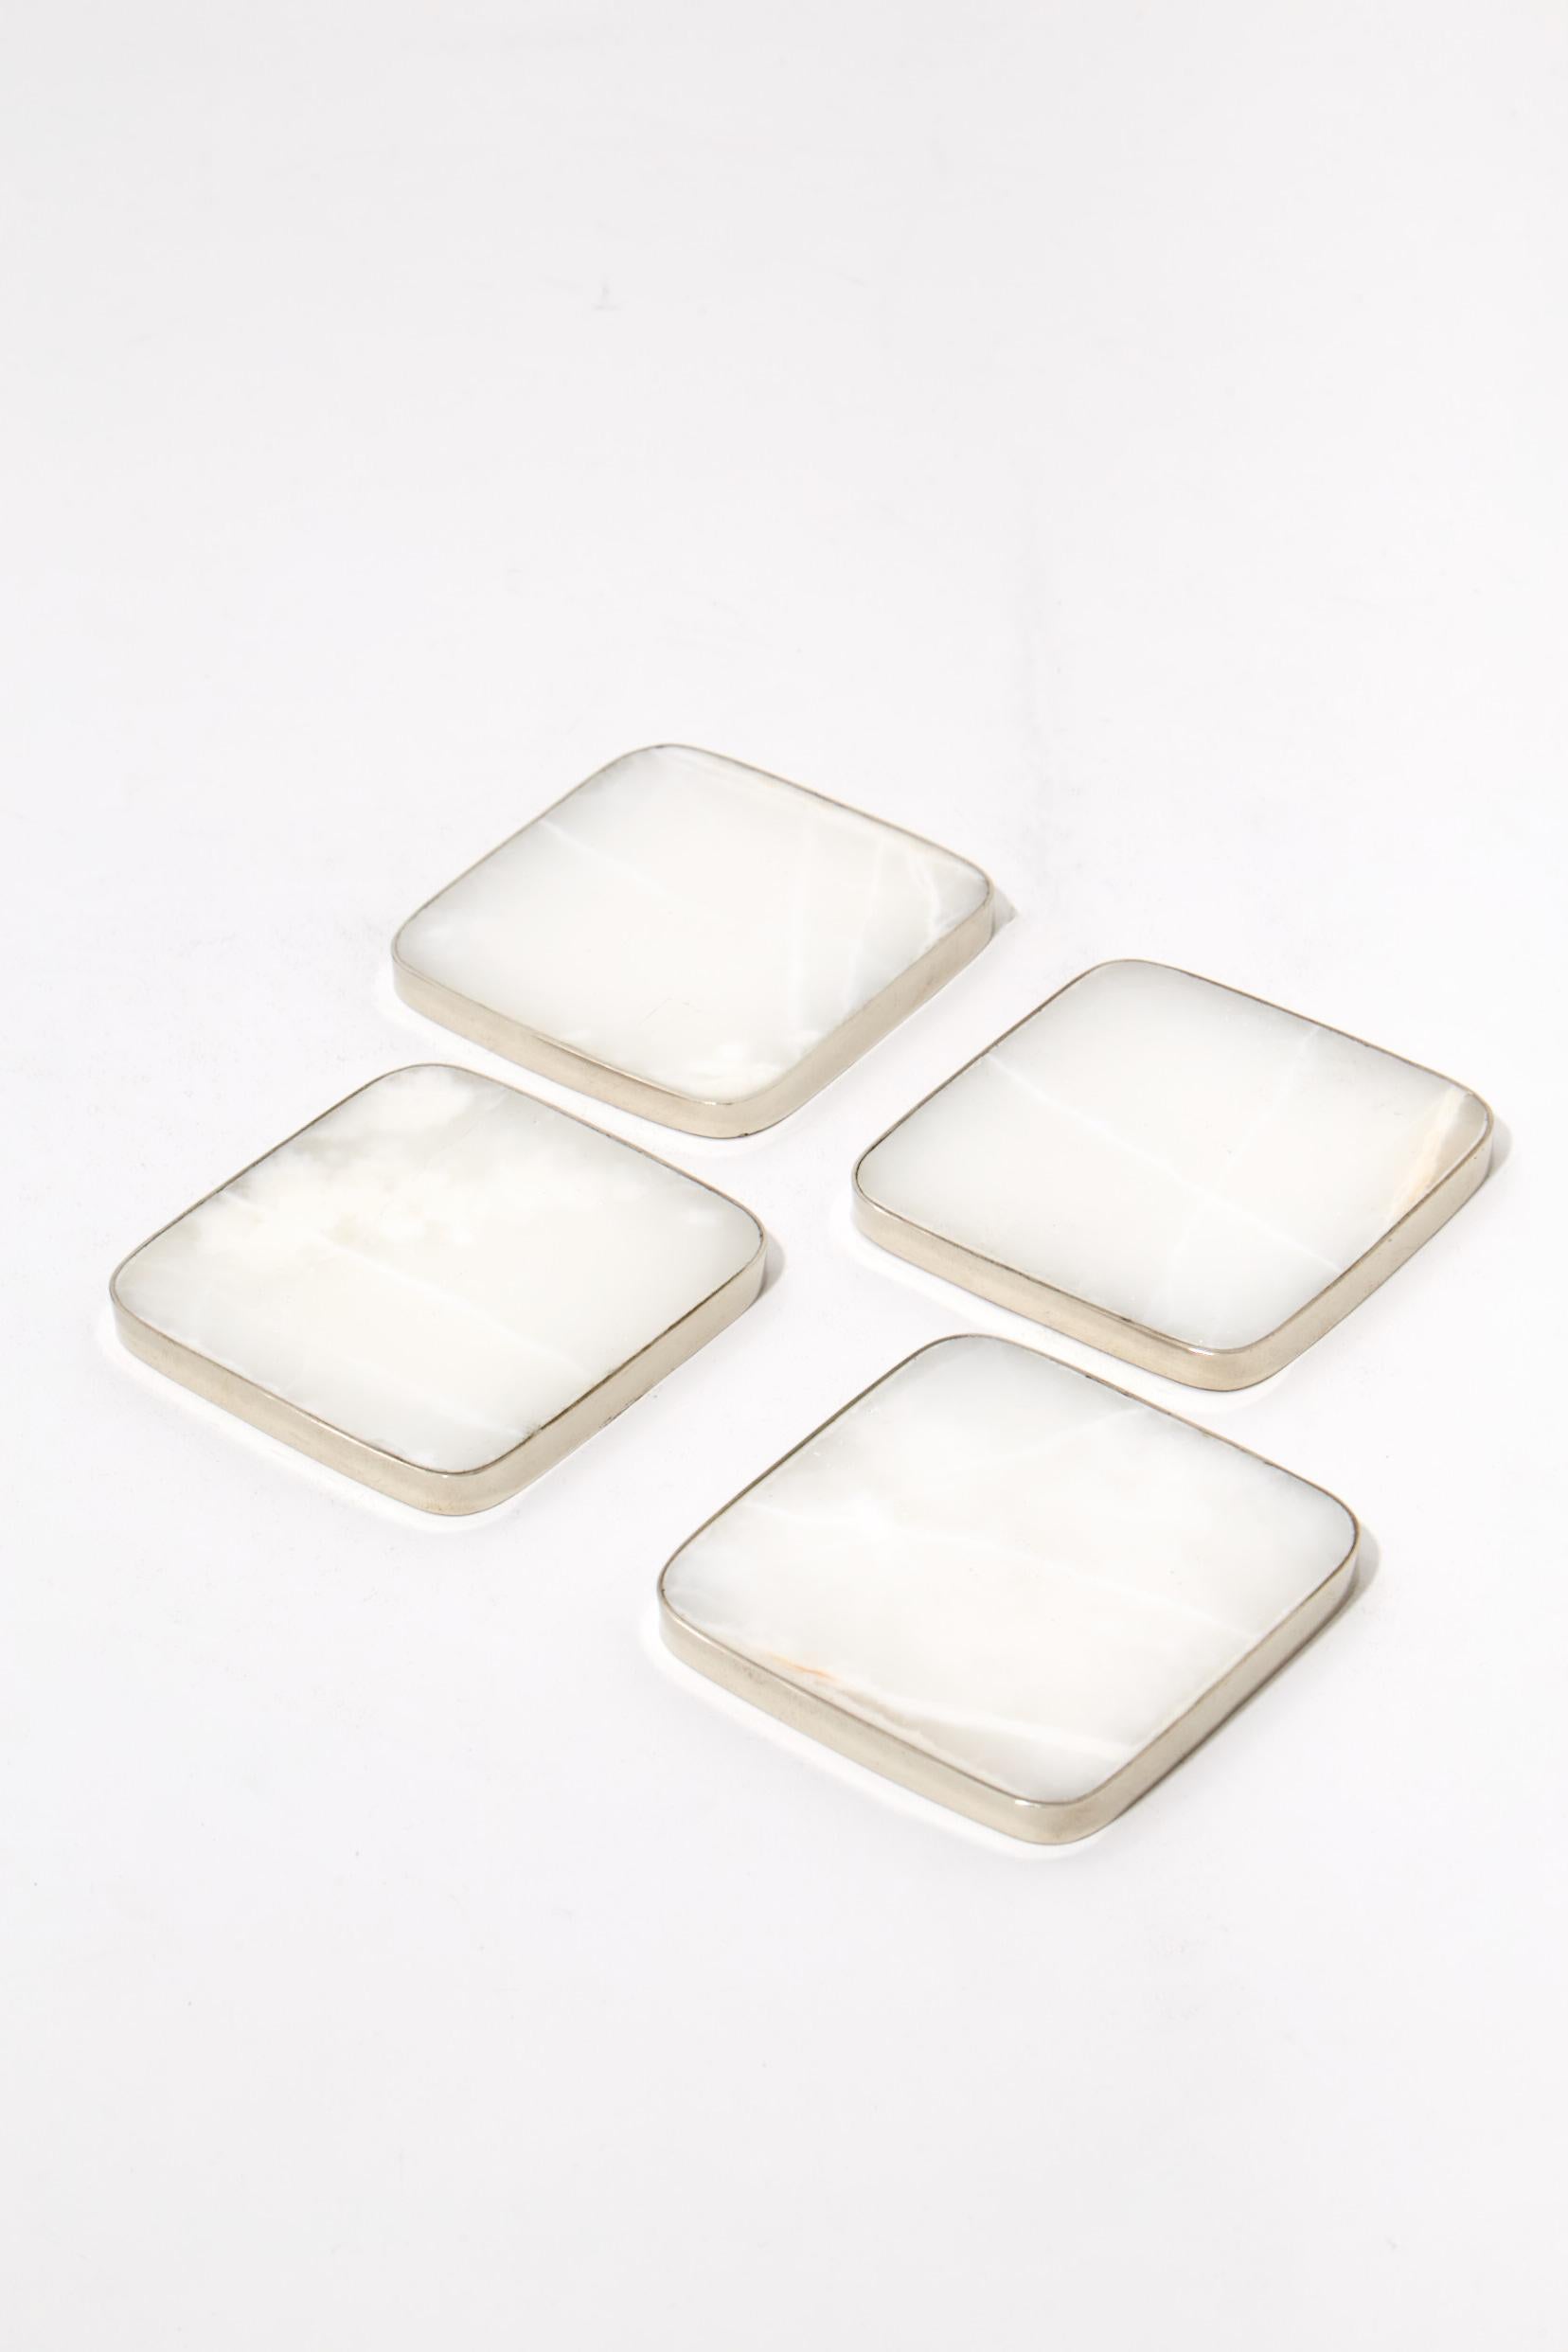 Contemporary Set of Salta Square Coasters, Alpaca Silver &  Natural Onyx Stone For Sale